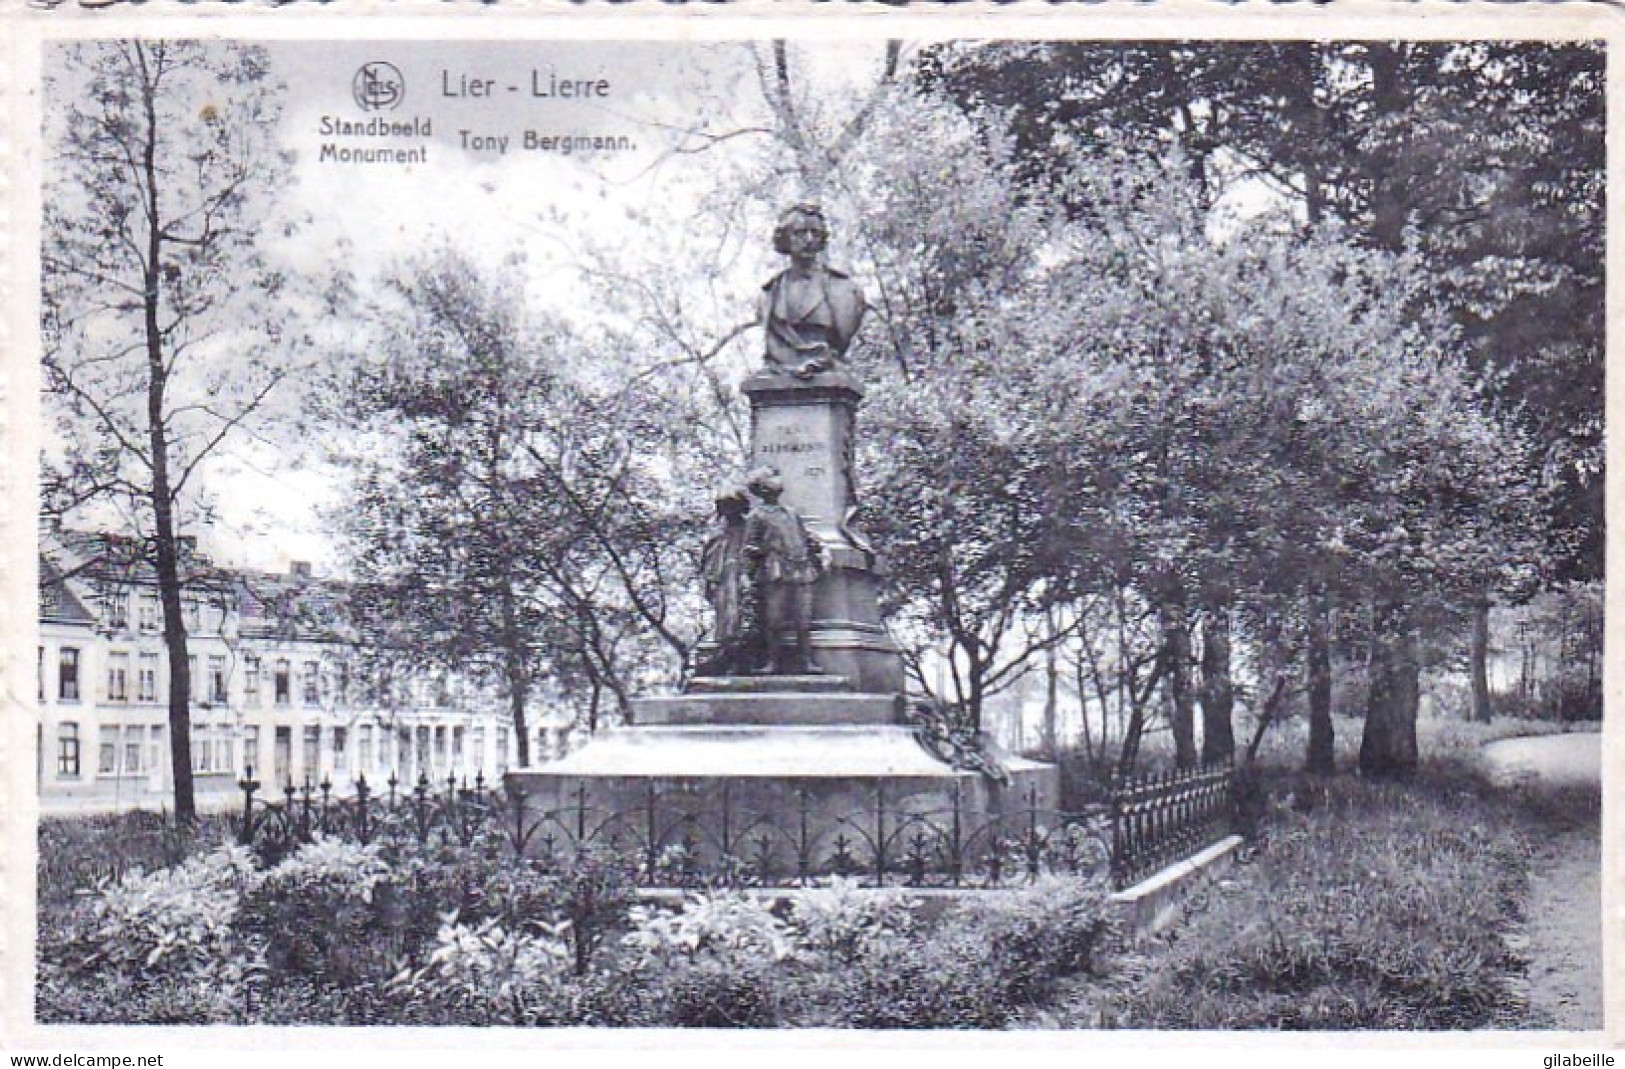 LIER - LIERRE - Monument Standbeeld -  Tony Bergmann - Lier